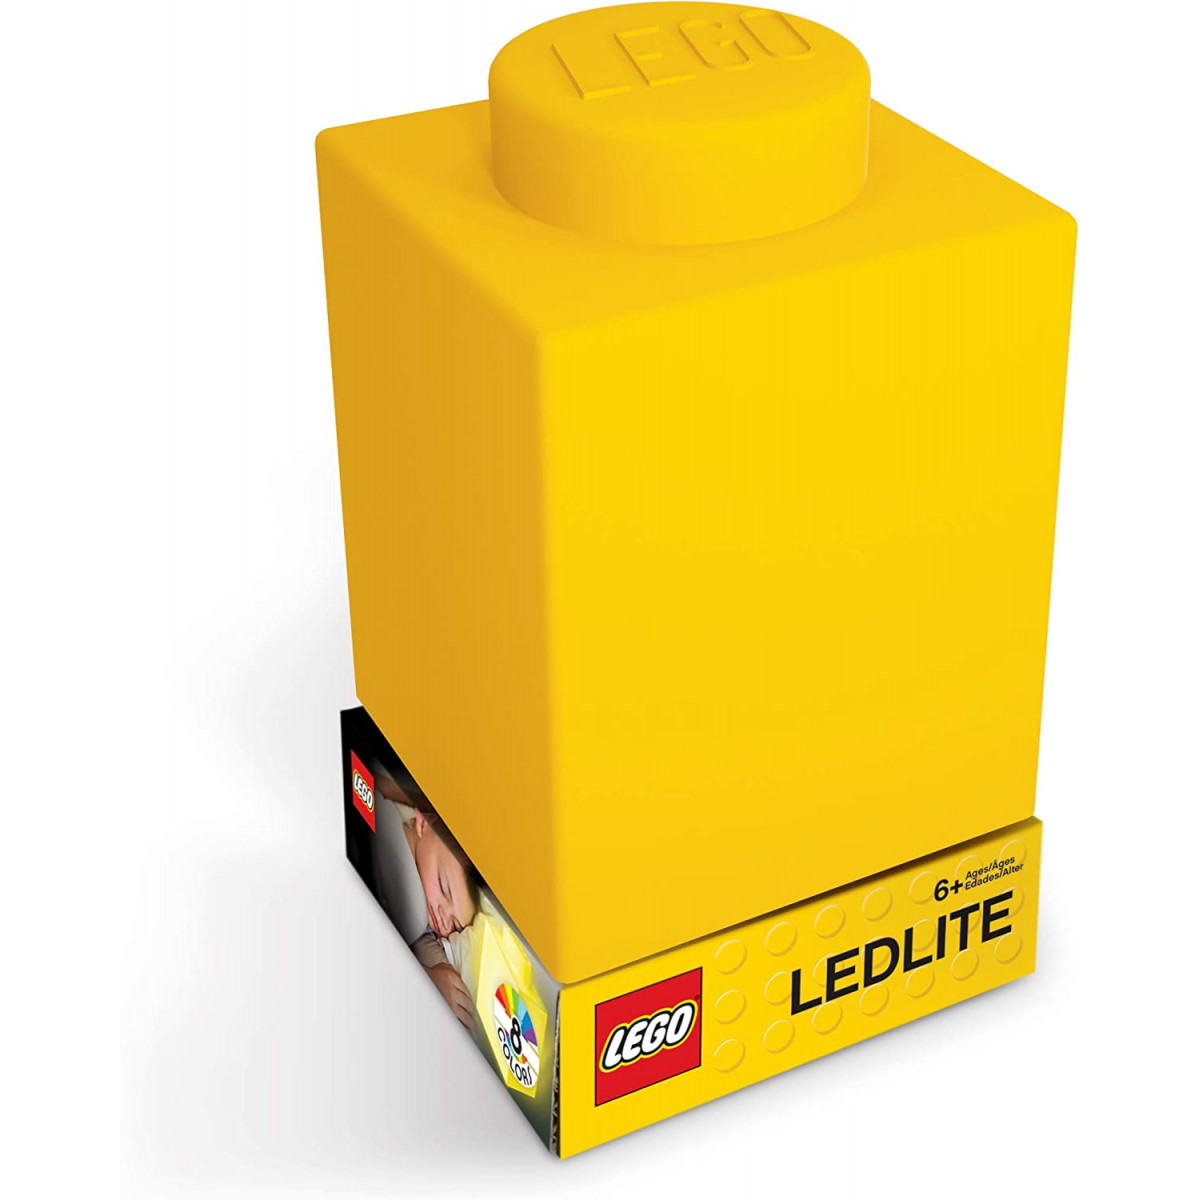 Lego LGL-LP39 - Lampada mattoncino da notte